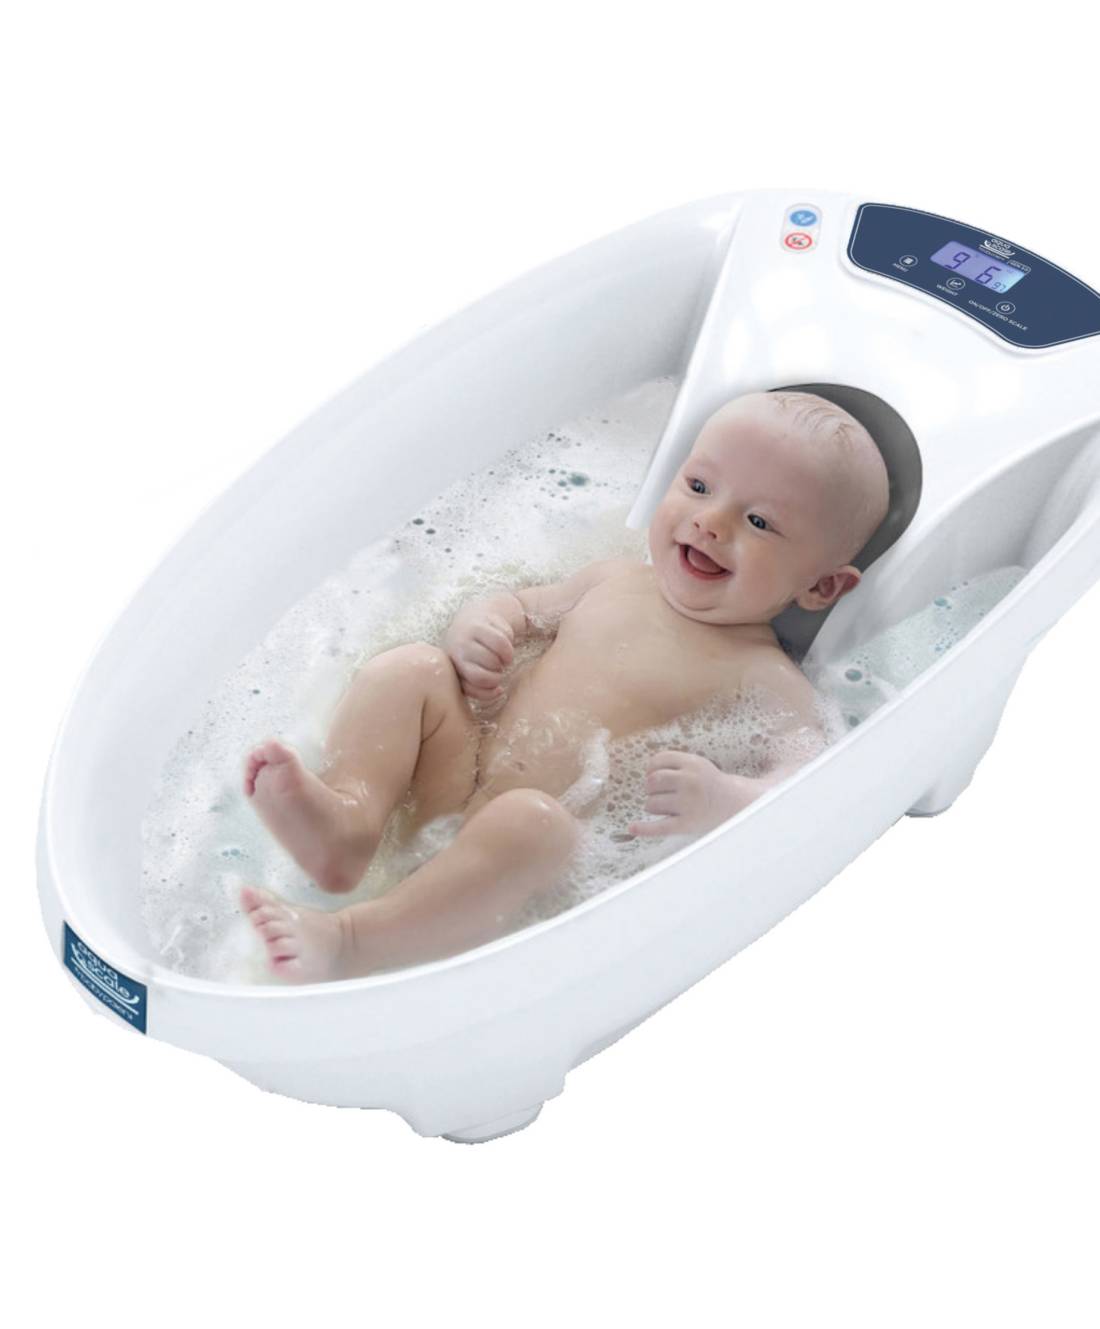 Aquascale V3 Digital Baby Bath - White